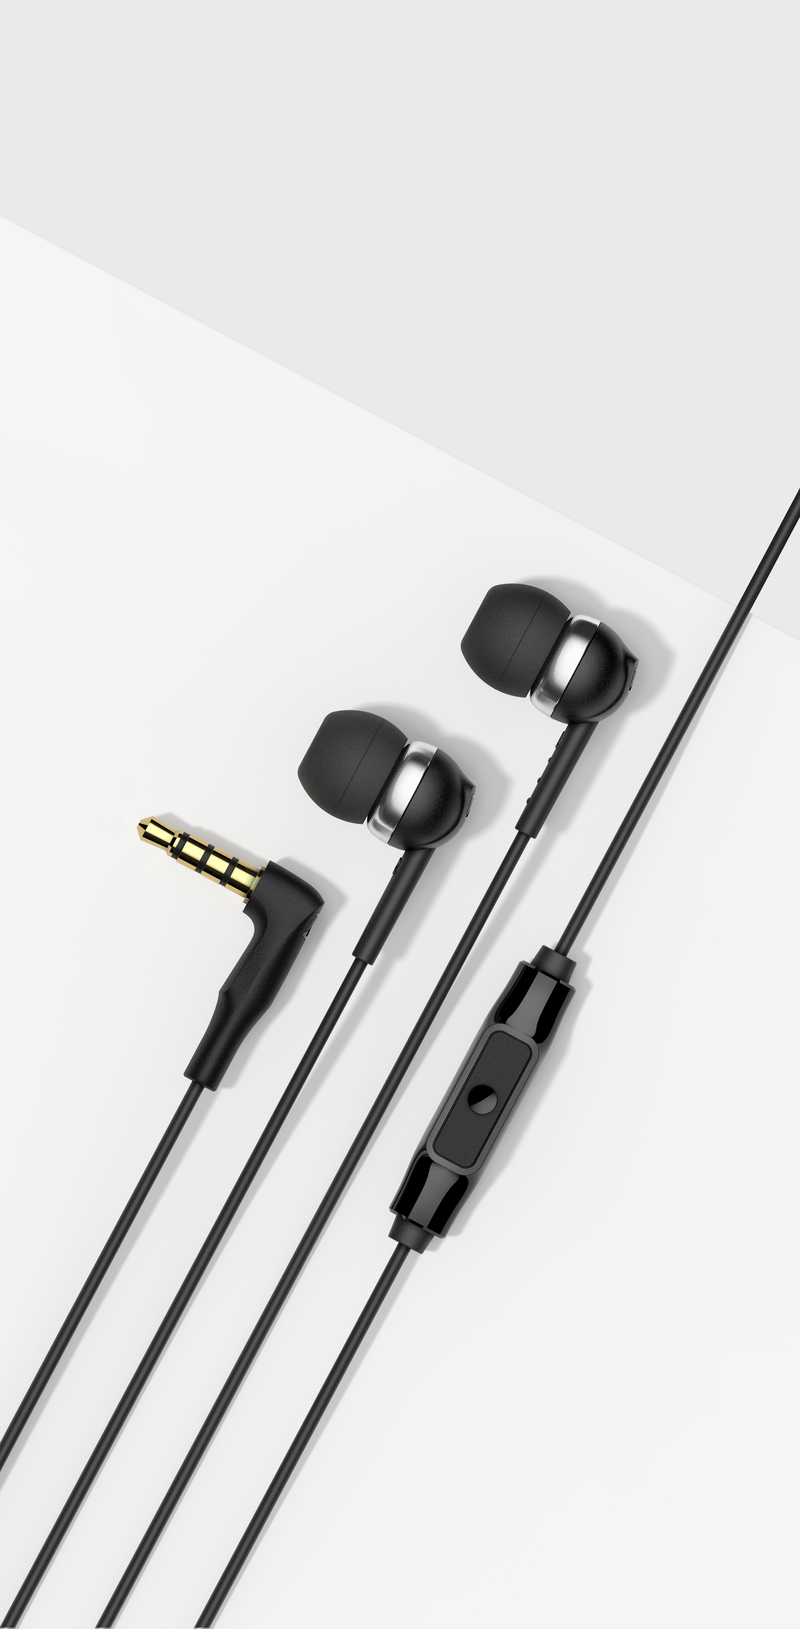 Sennheiser Cx 80S Wired In-Ear Earphones with Mic